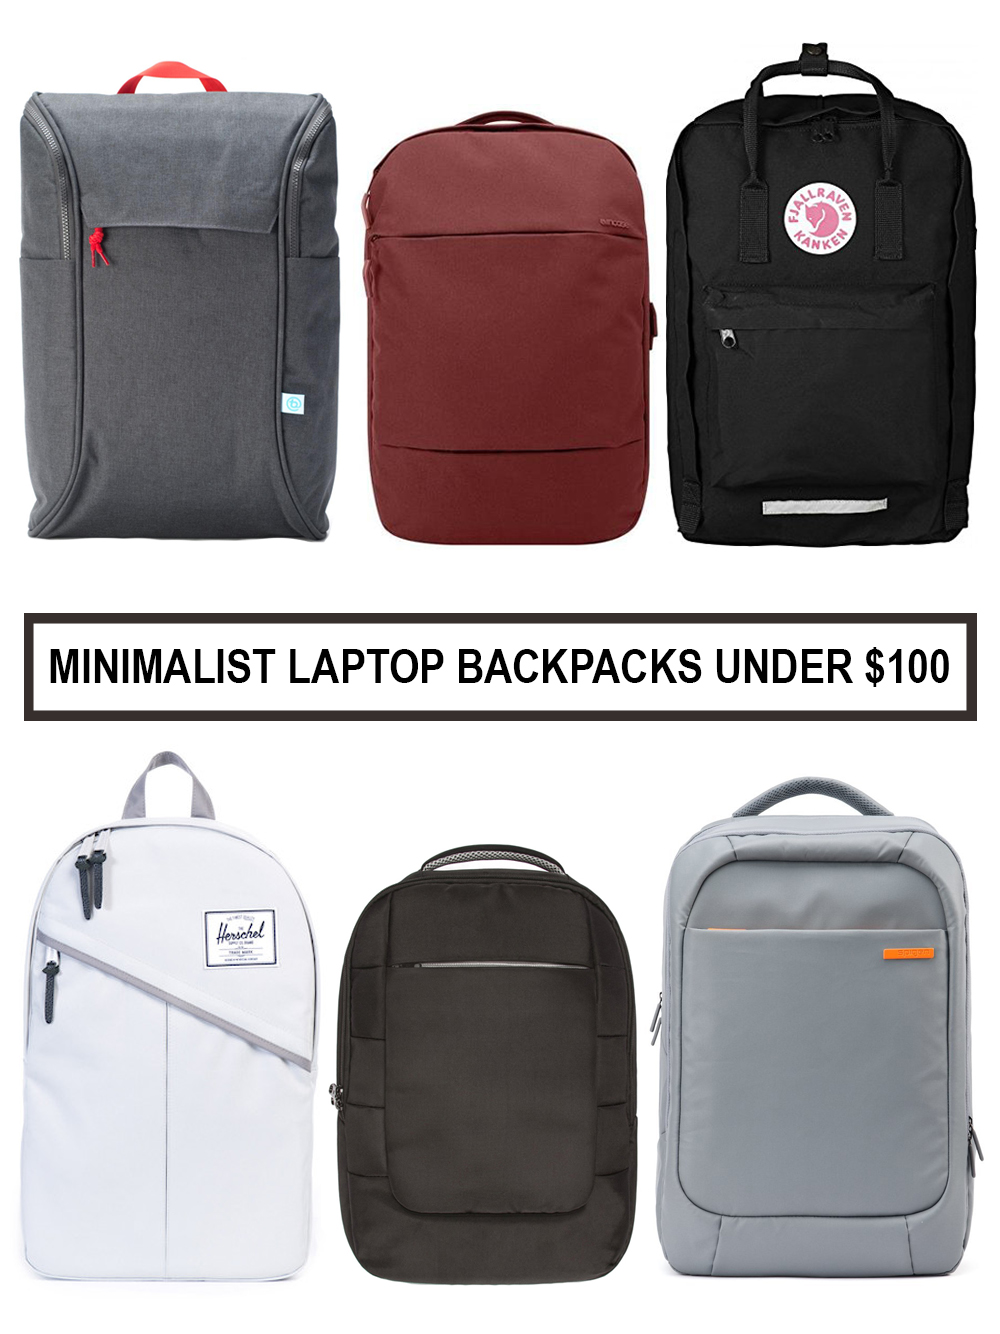 Minimalist Laptop Backpacks under $100 